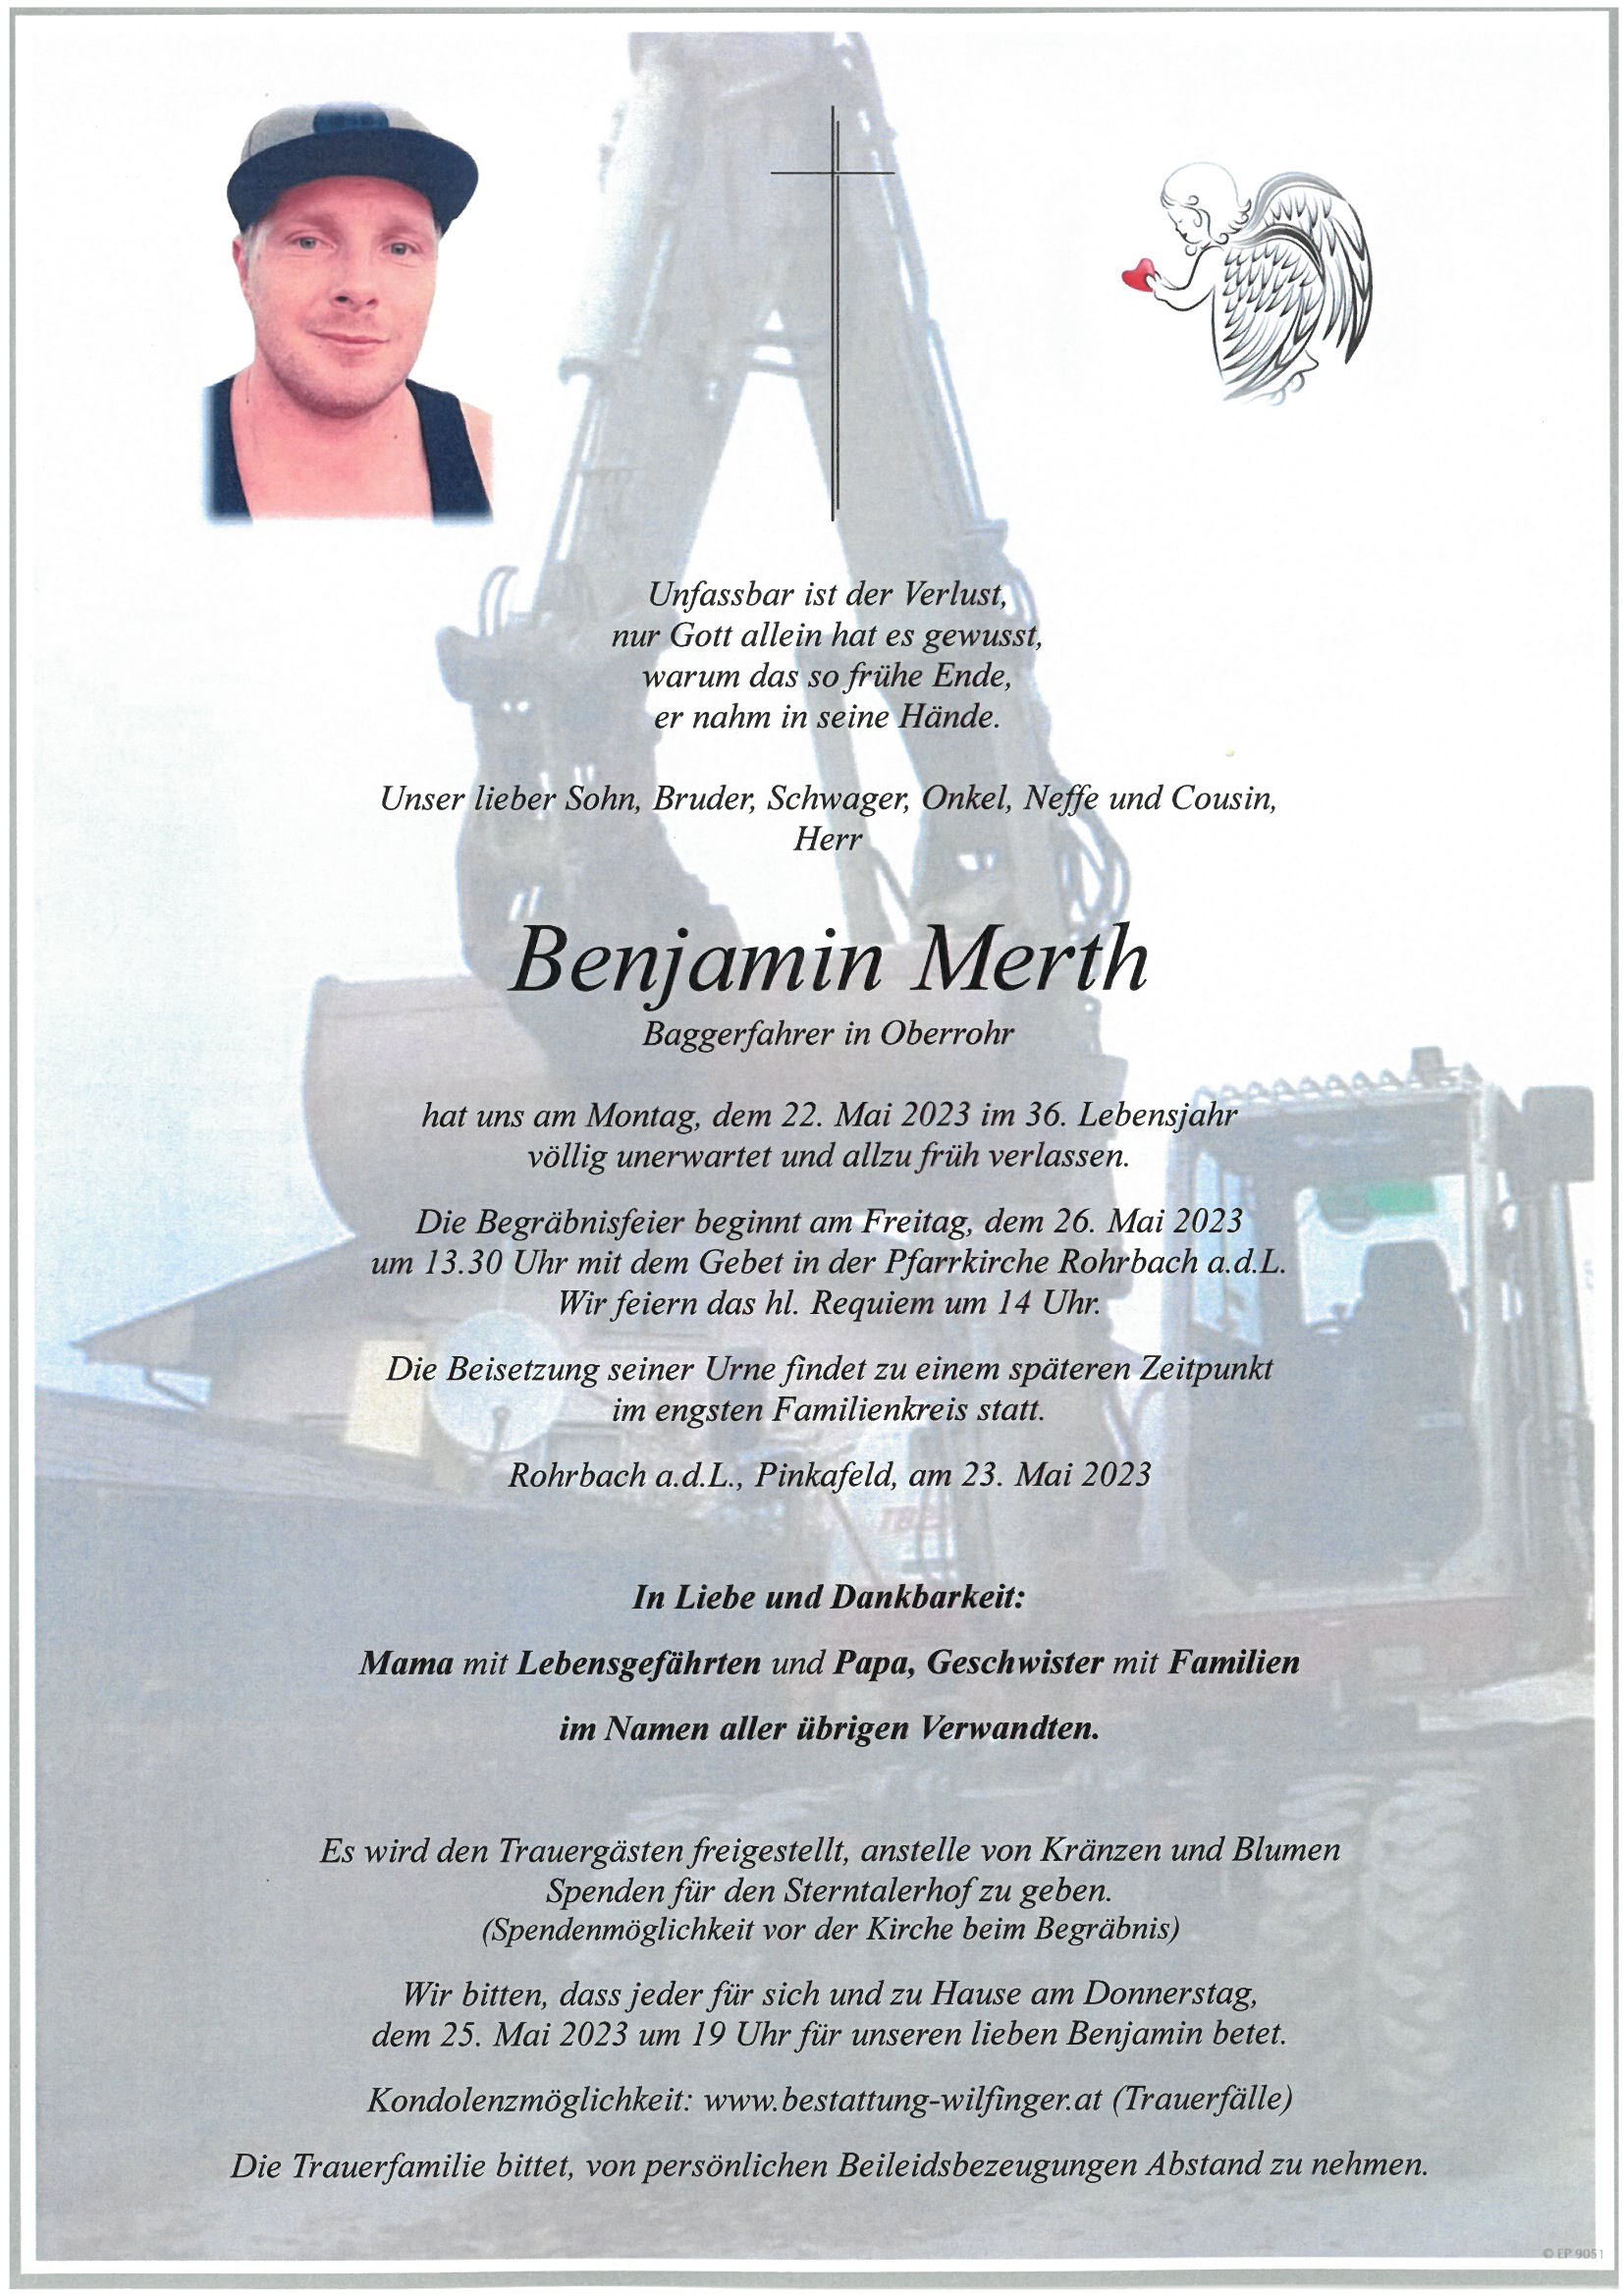 Merth Benjamin, Oberrohr-Rohrbach a.d.L.